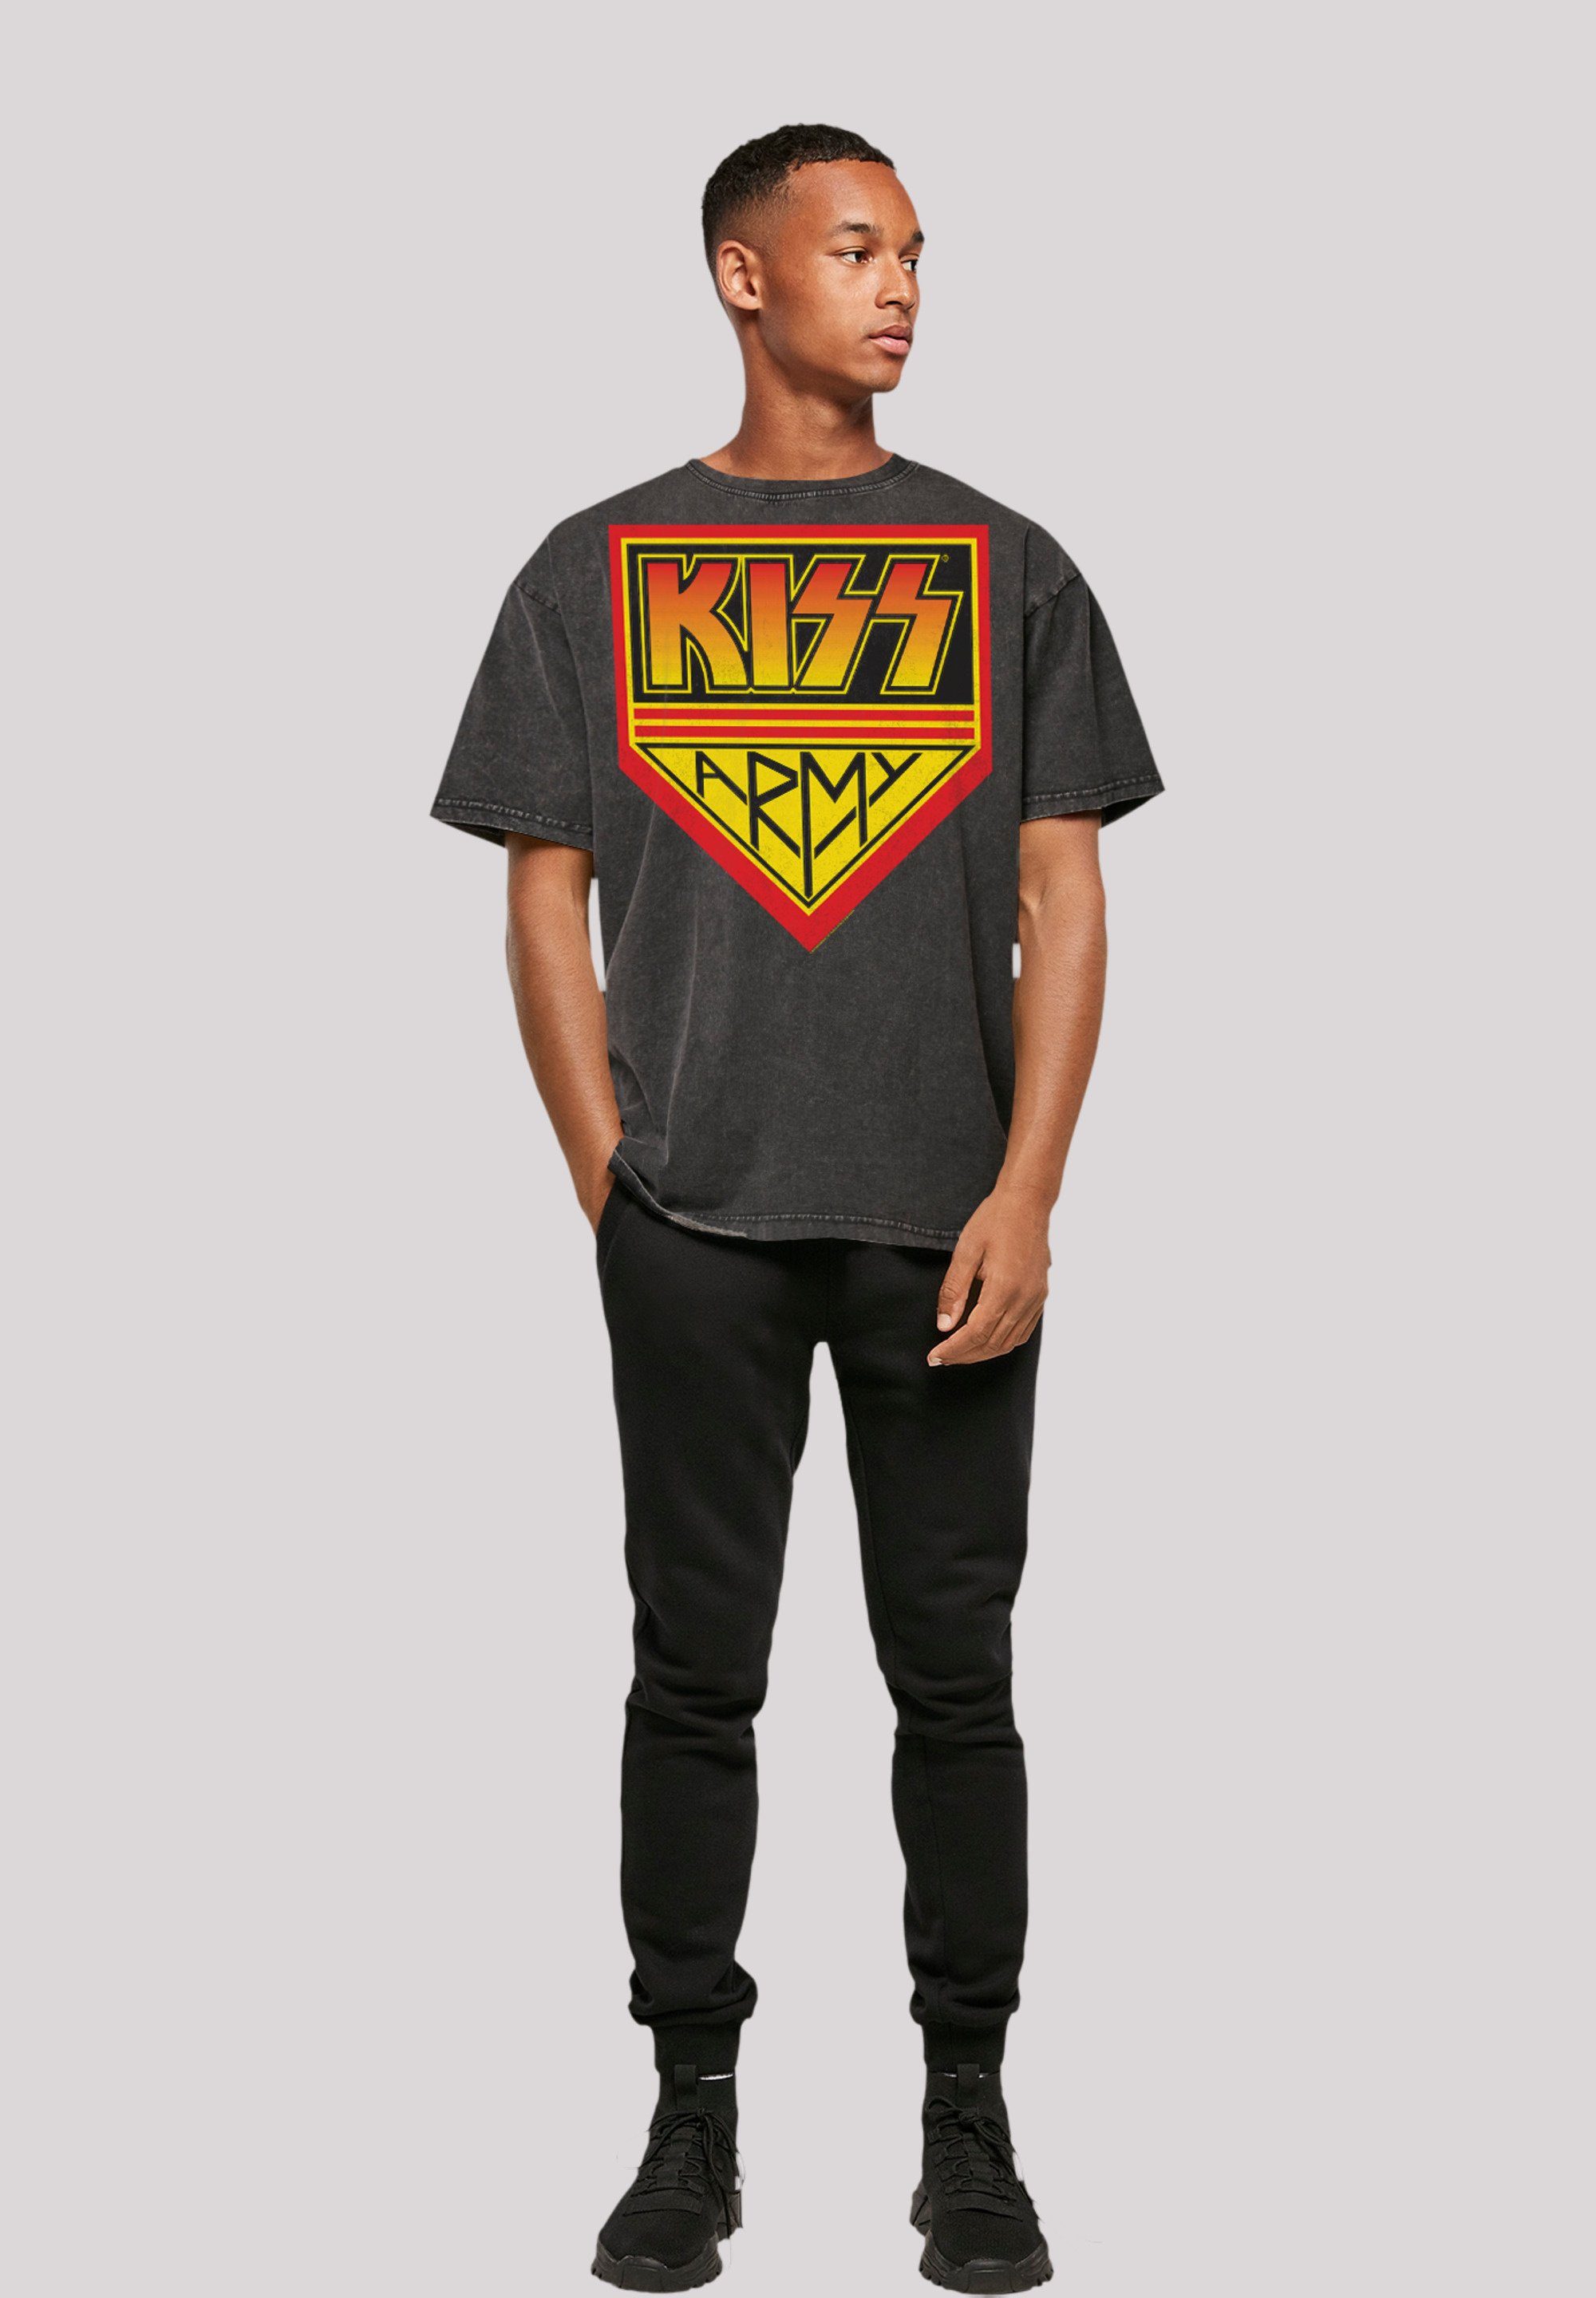 F4NT4STIC Band Qualität, Logo schwarz Off Rock Premium Kiss T-Shirt Musik, Army Rock By